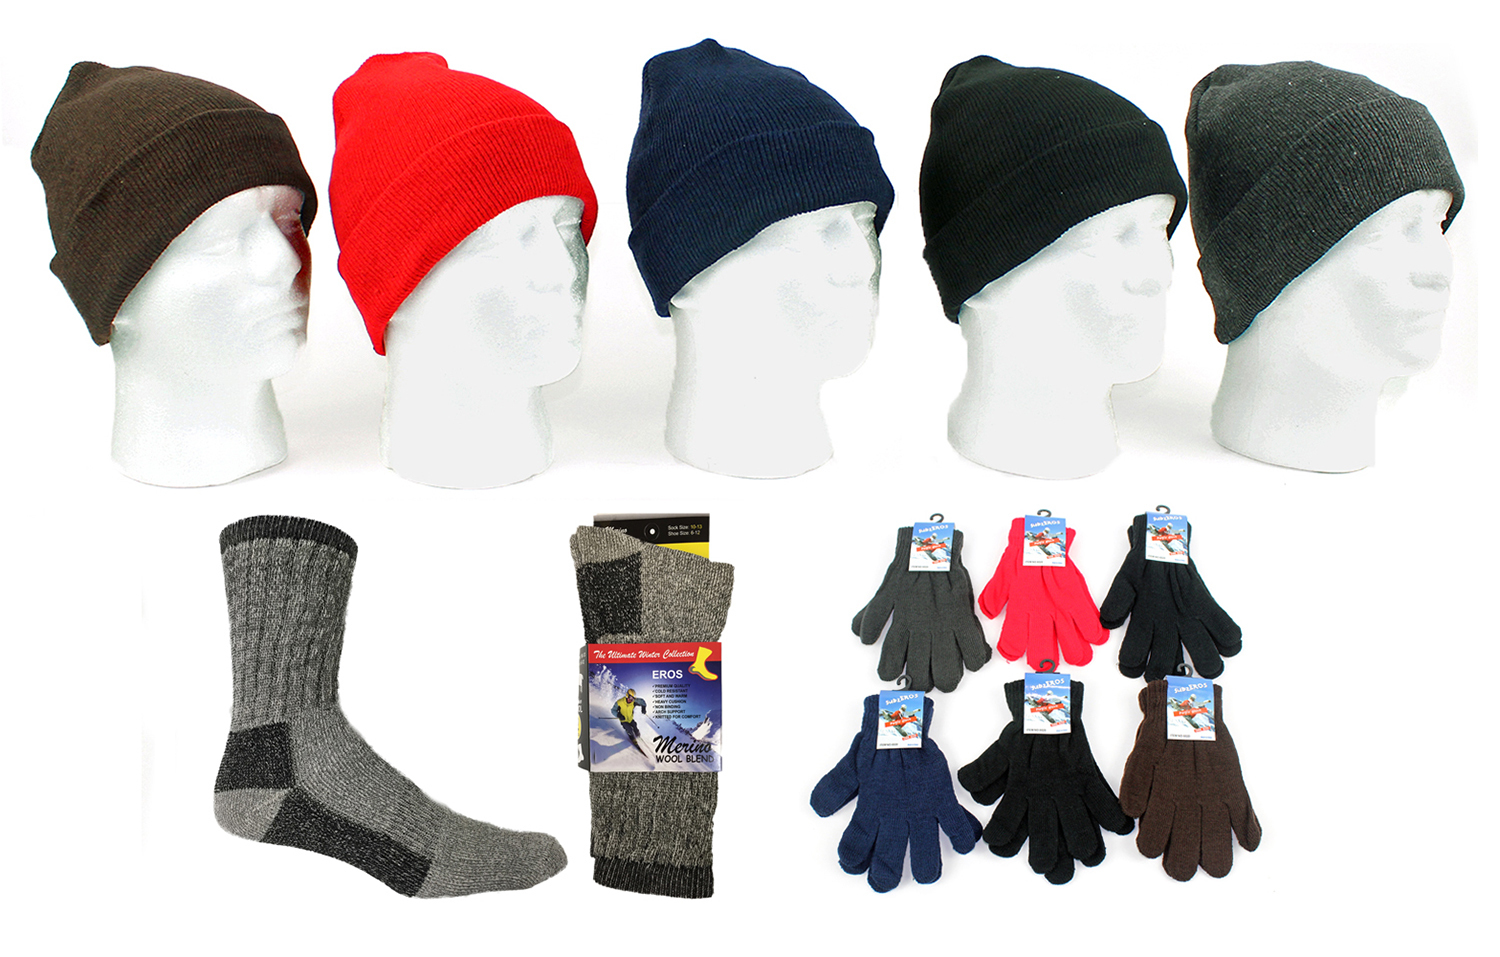 Wholesale Women's Socks, Hats, & Gloves - Thermal, Magic, Winter Sets